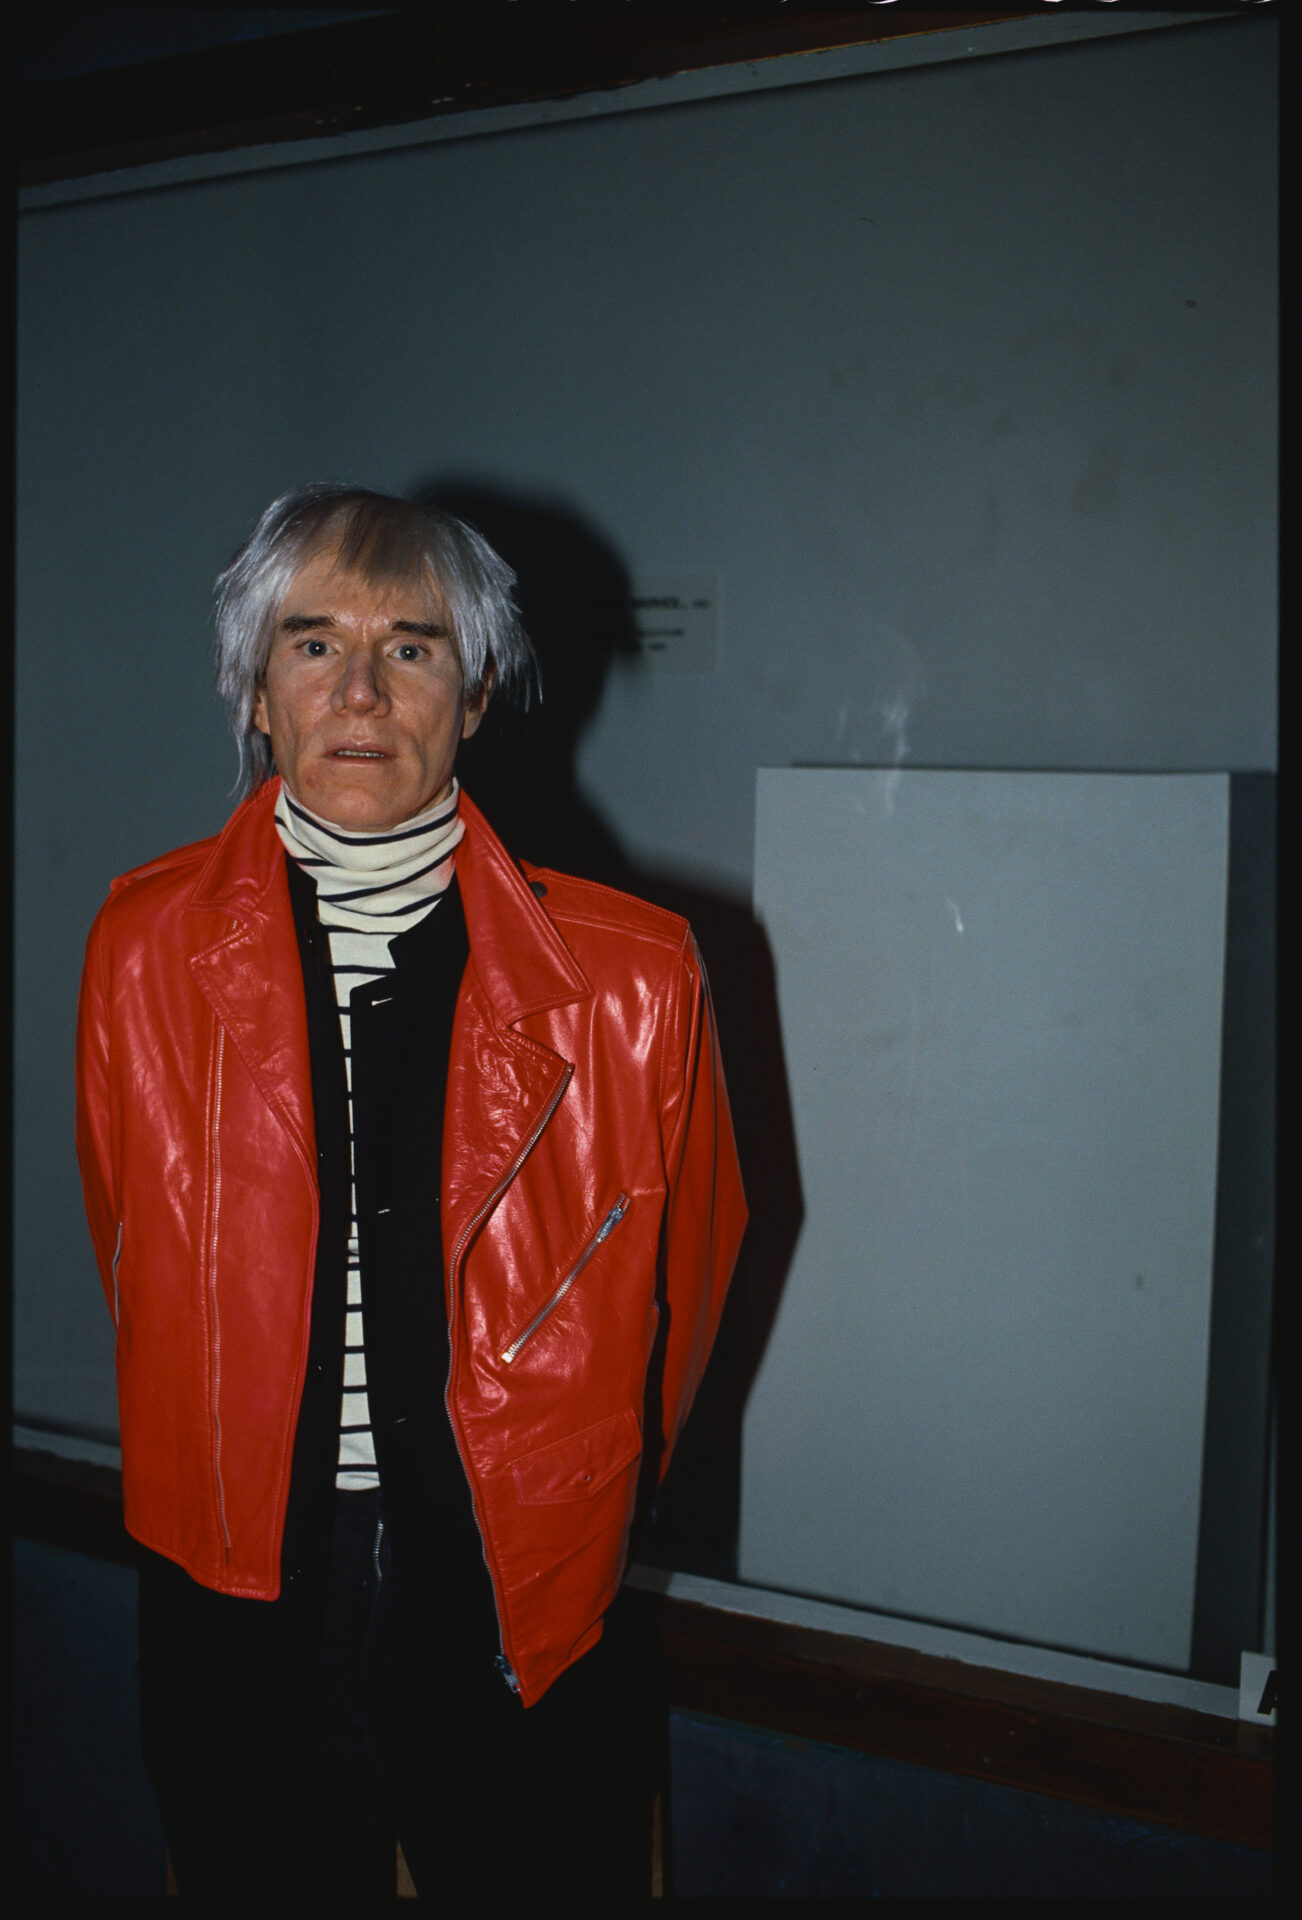 Andy Warhol Wearing Red Jacket